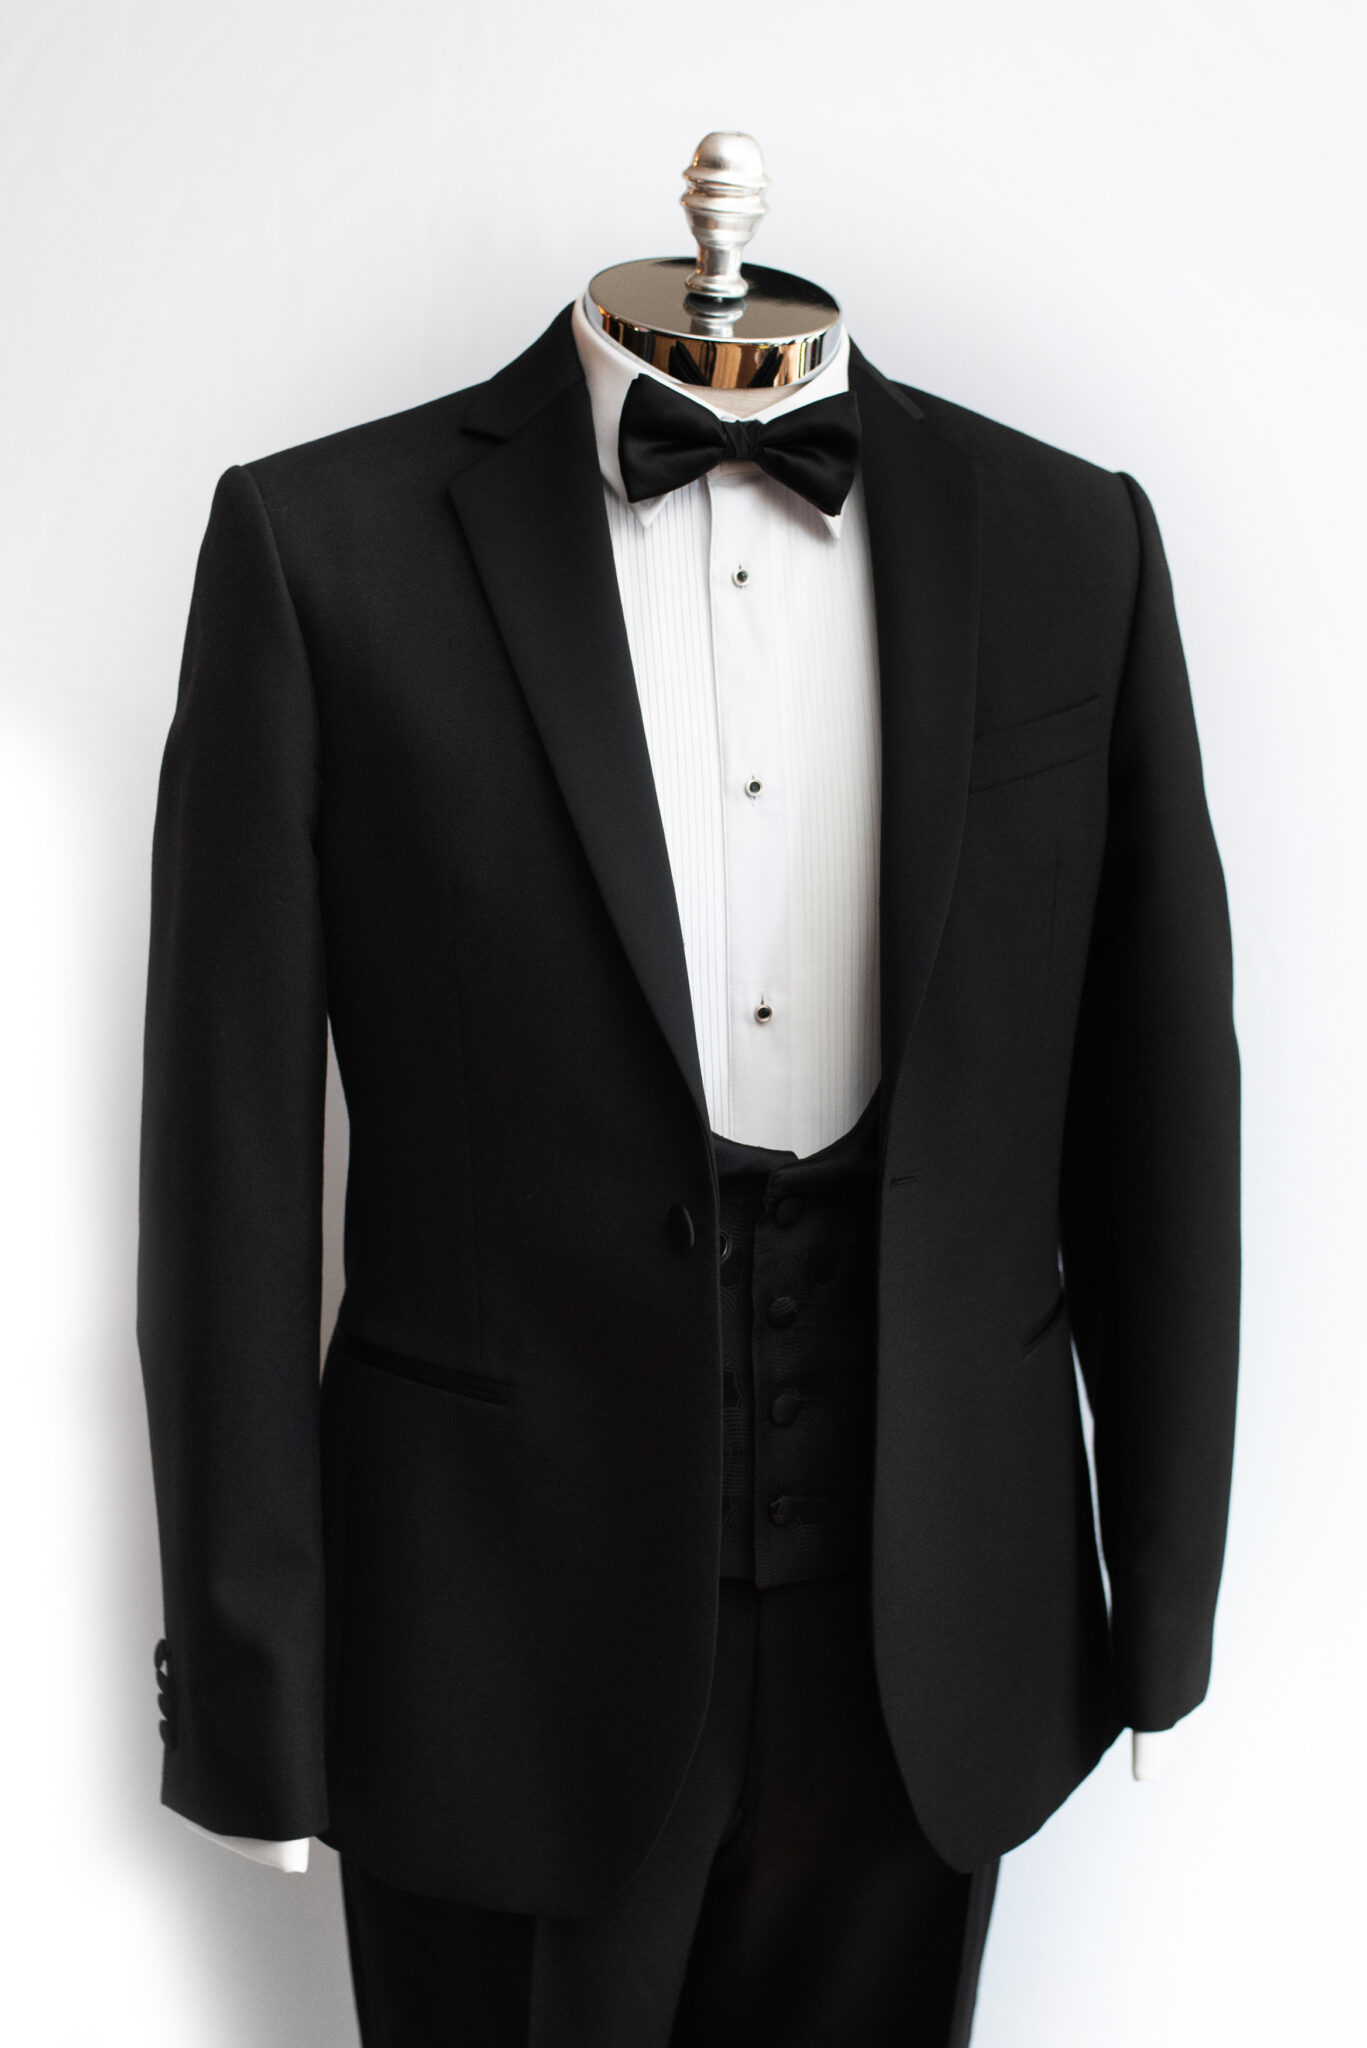 Suit Hire - Black Dress Suit in Slim and Regular fit - Corcoran's Menswear